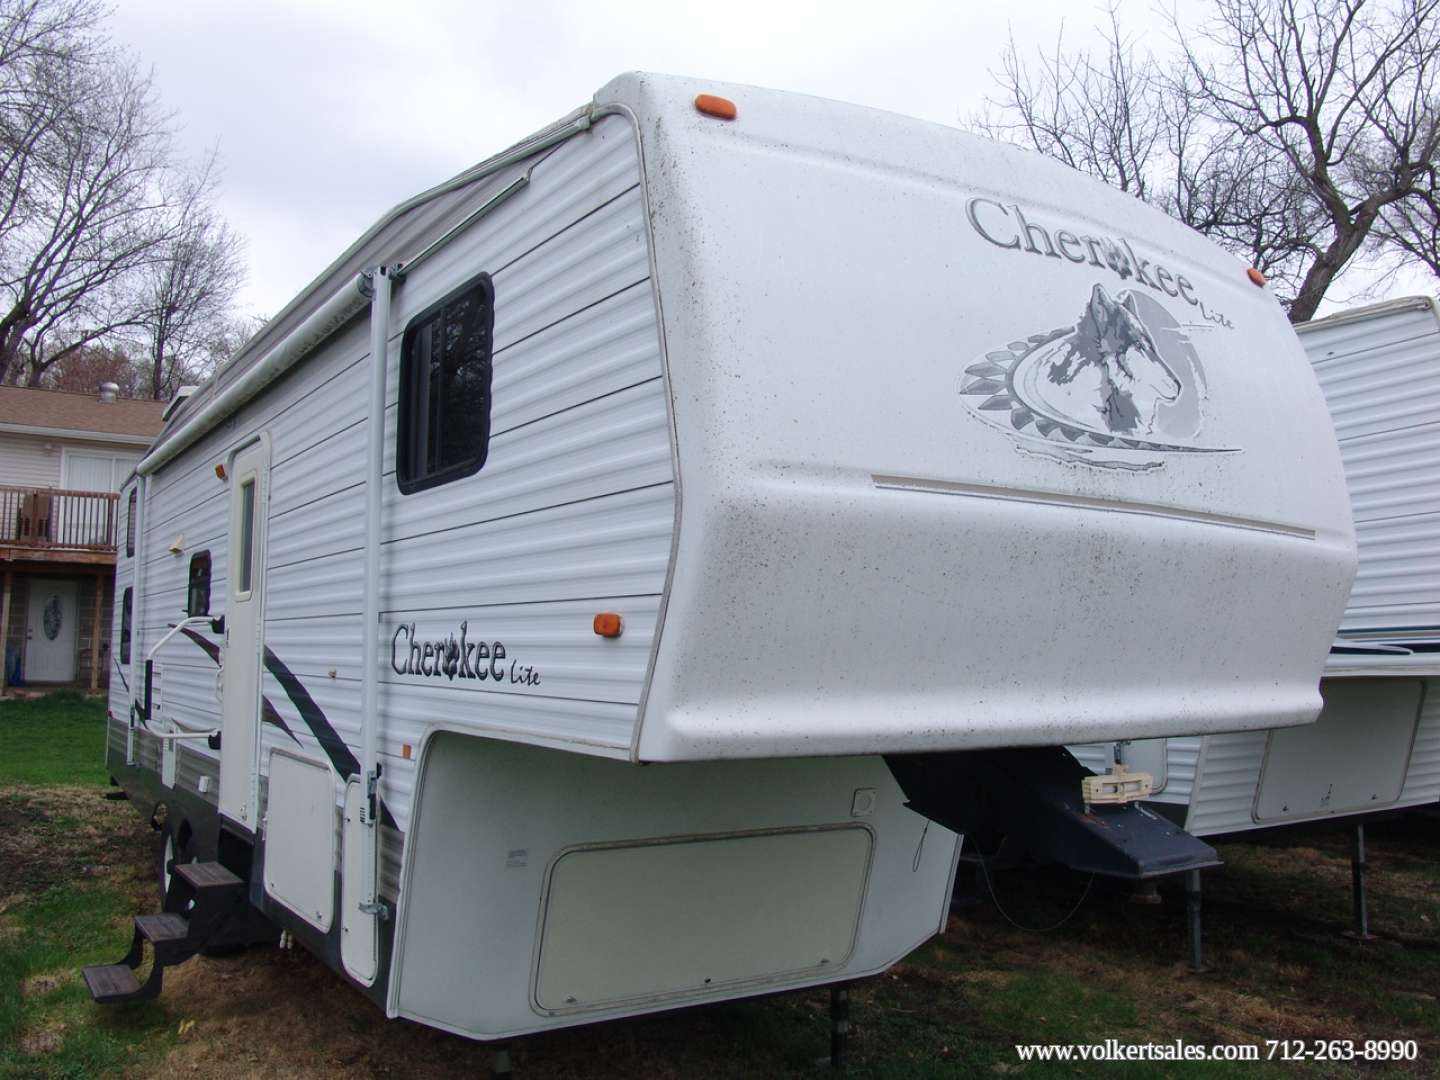 2005 cherokee travel trailer